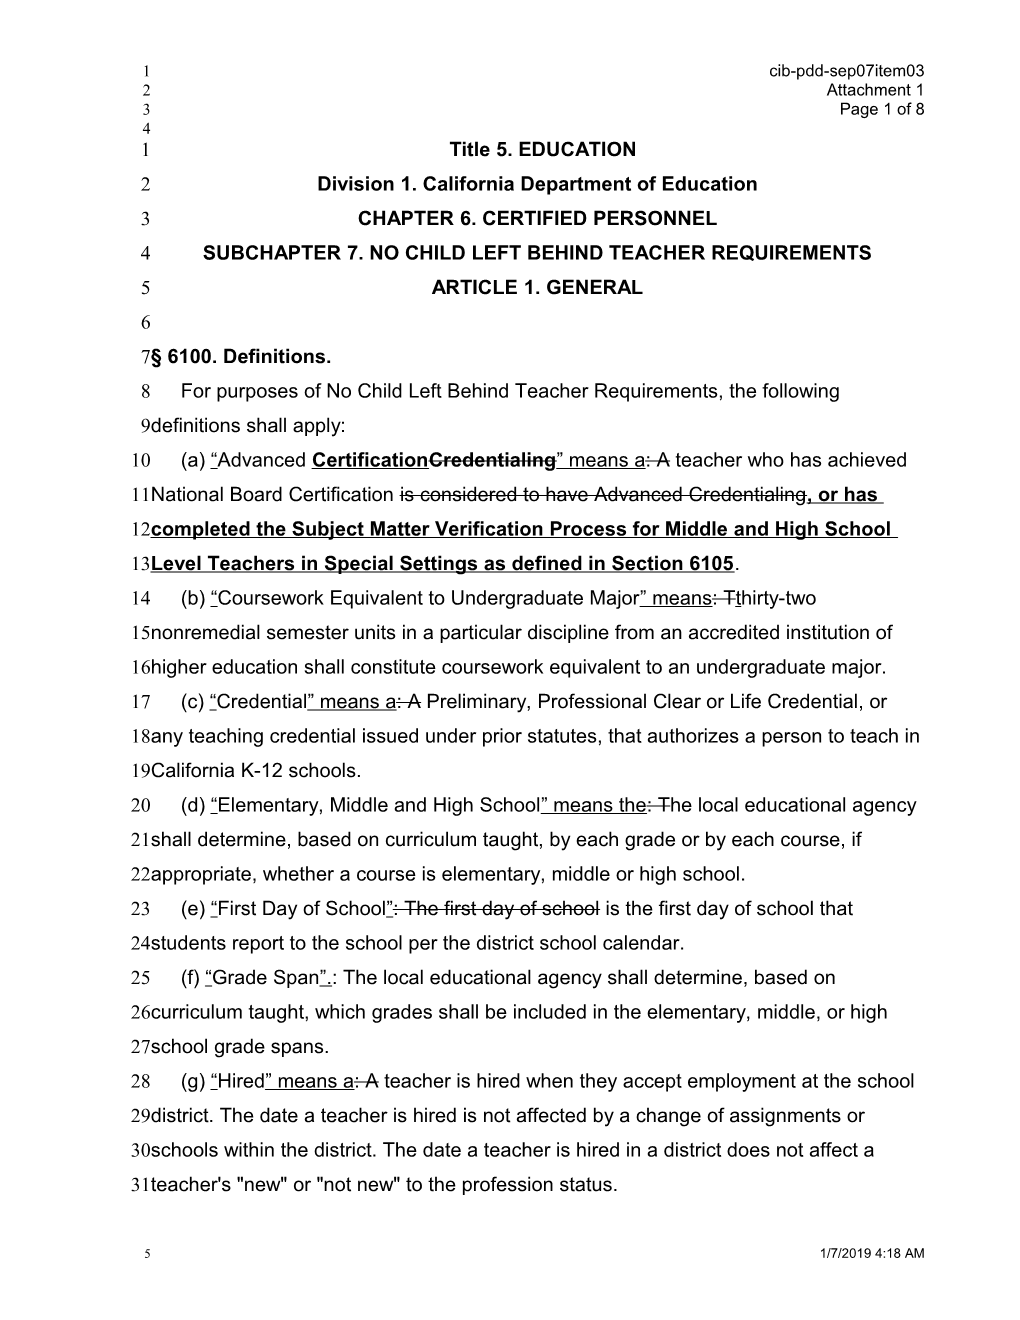 September 2007 Agenda Item 10 Attachment 1 - Meeting Agendas (CA State Board of Education)